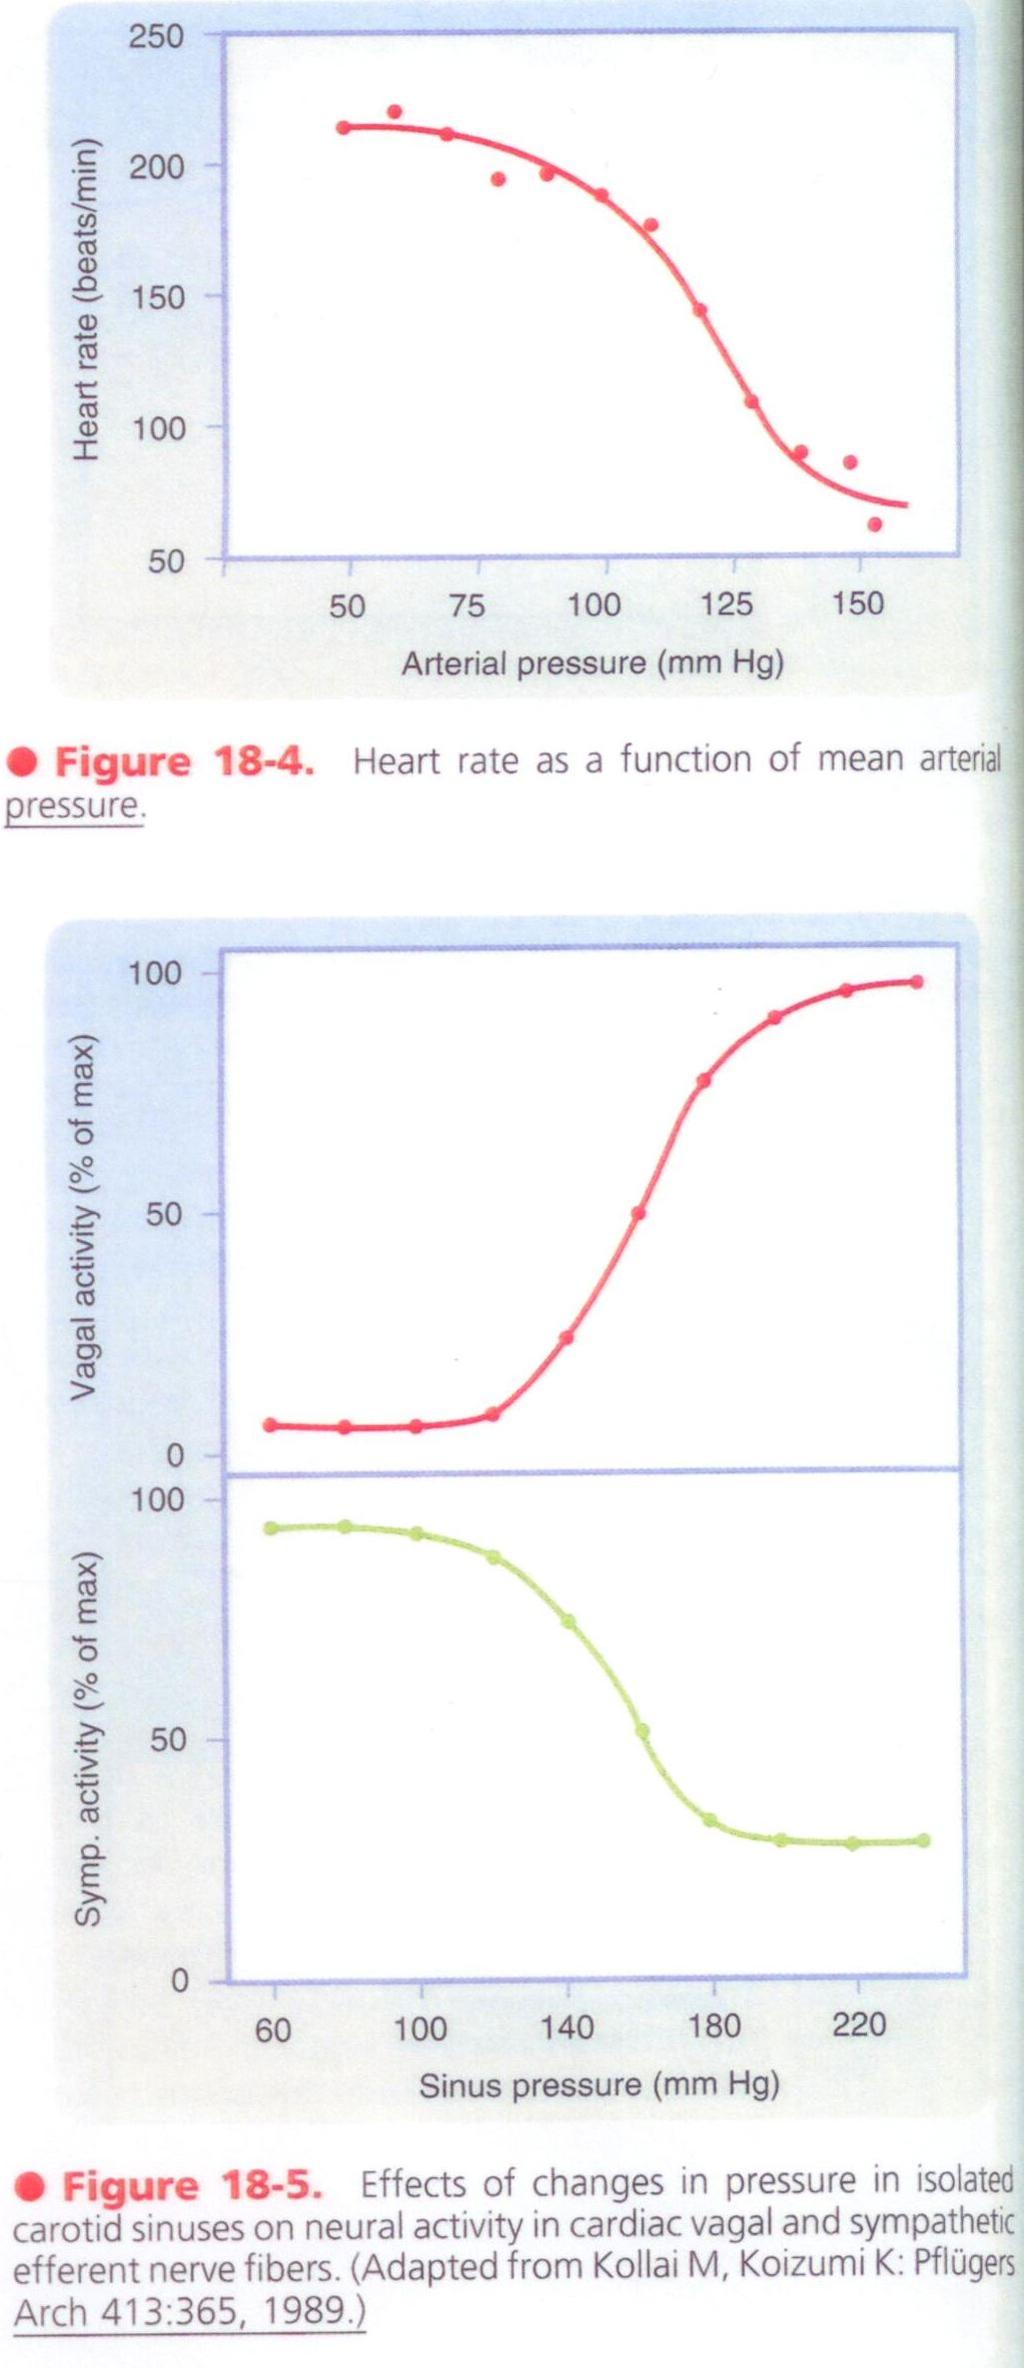 BIPN100 F15 Human Physiol I (Kristan) Lecture 14 Cardiovascular control mechanisms p. 5 ii.